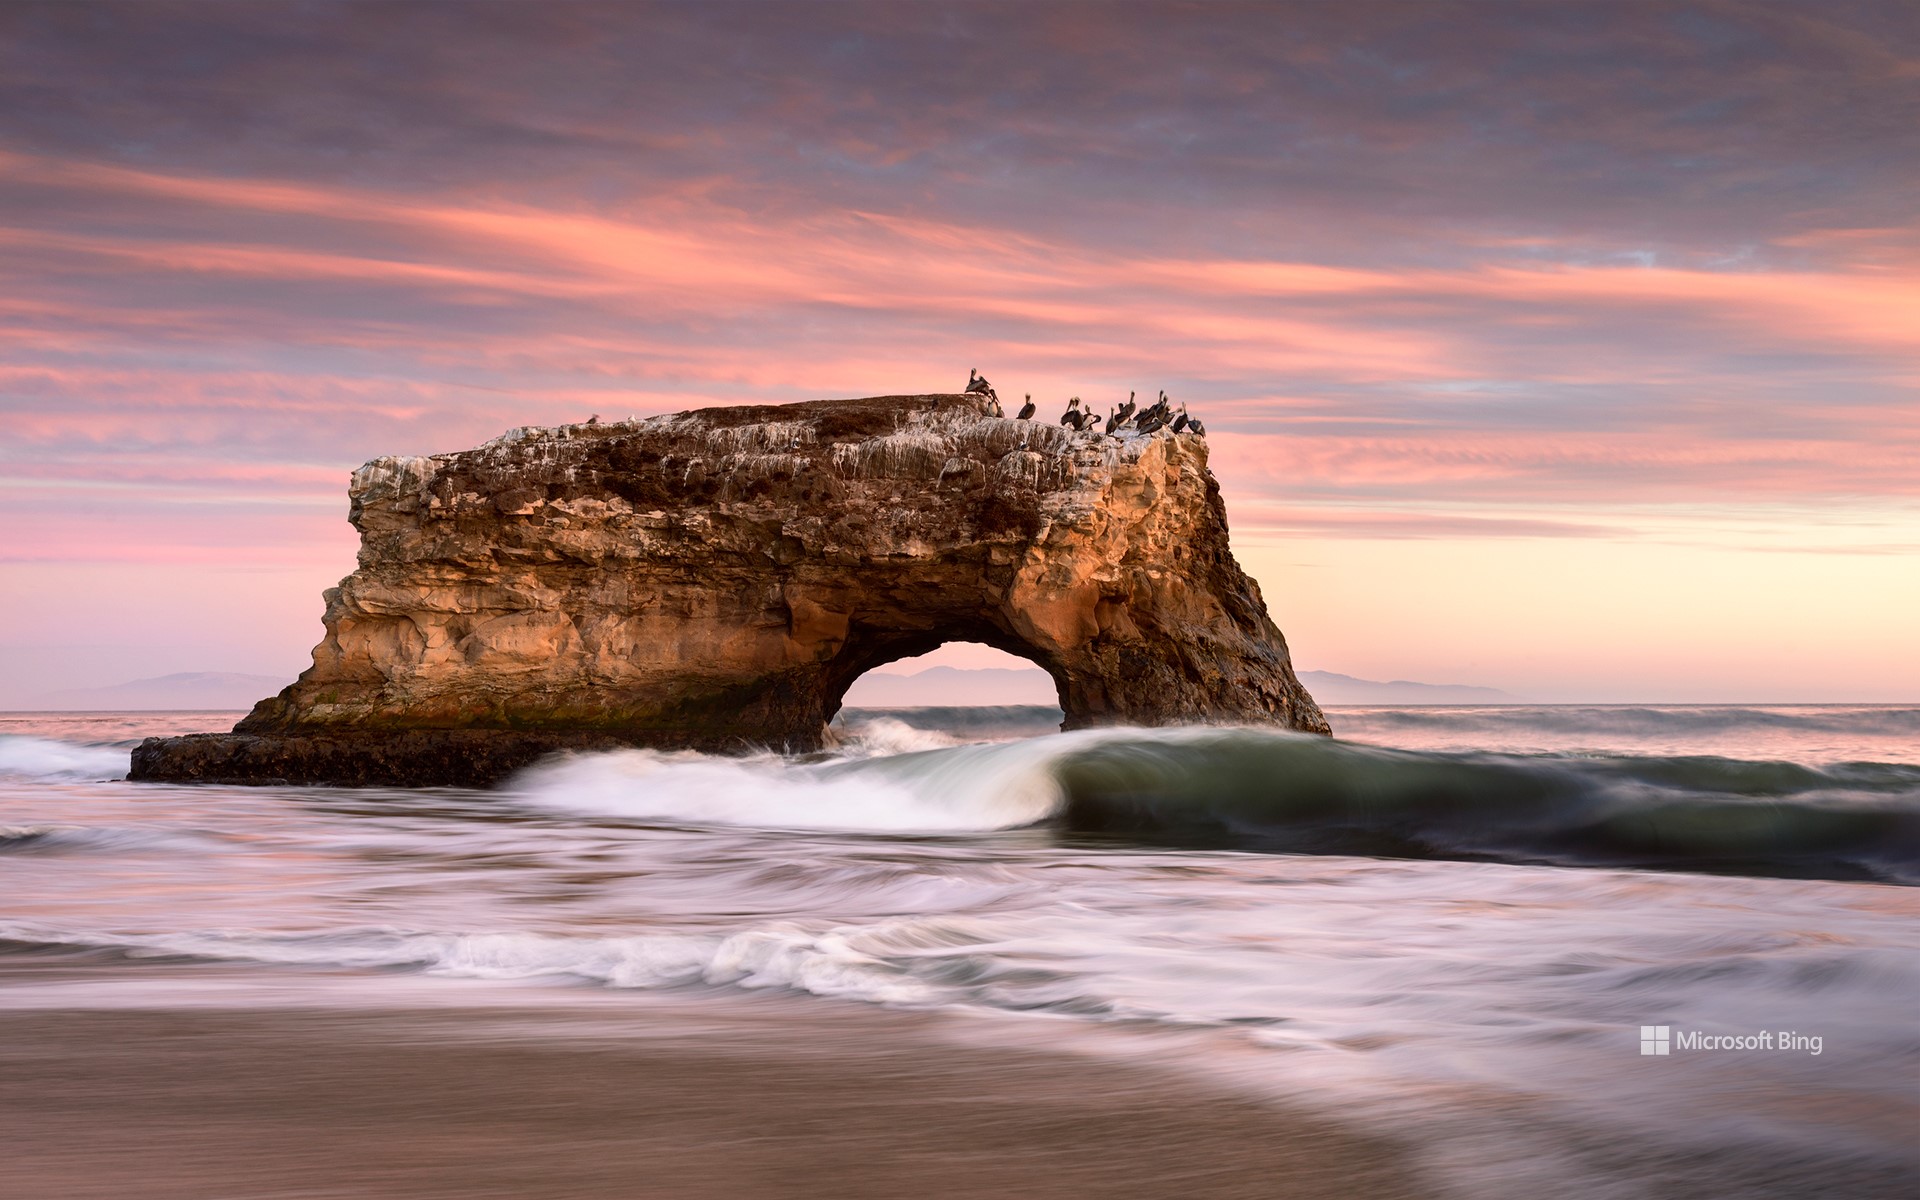 Natural Bridges State Beach in Santa Cruz, California